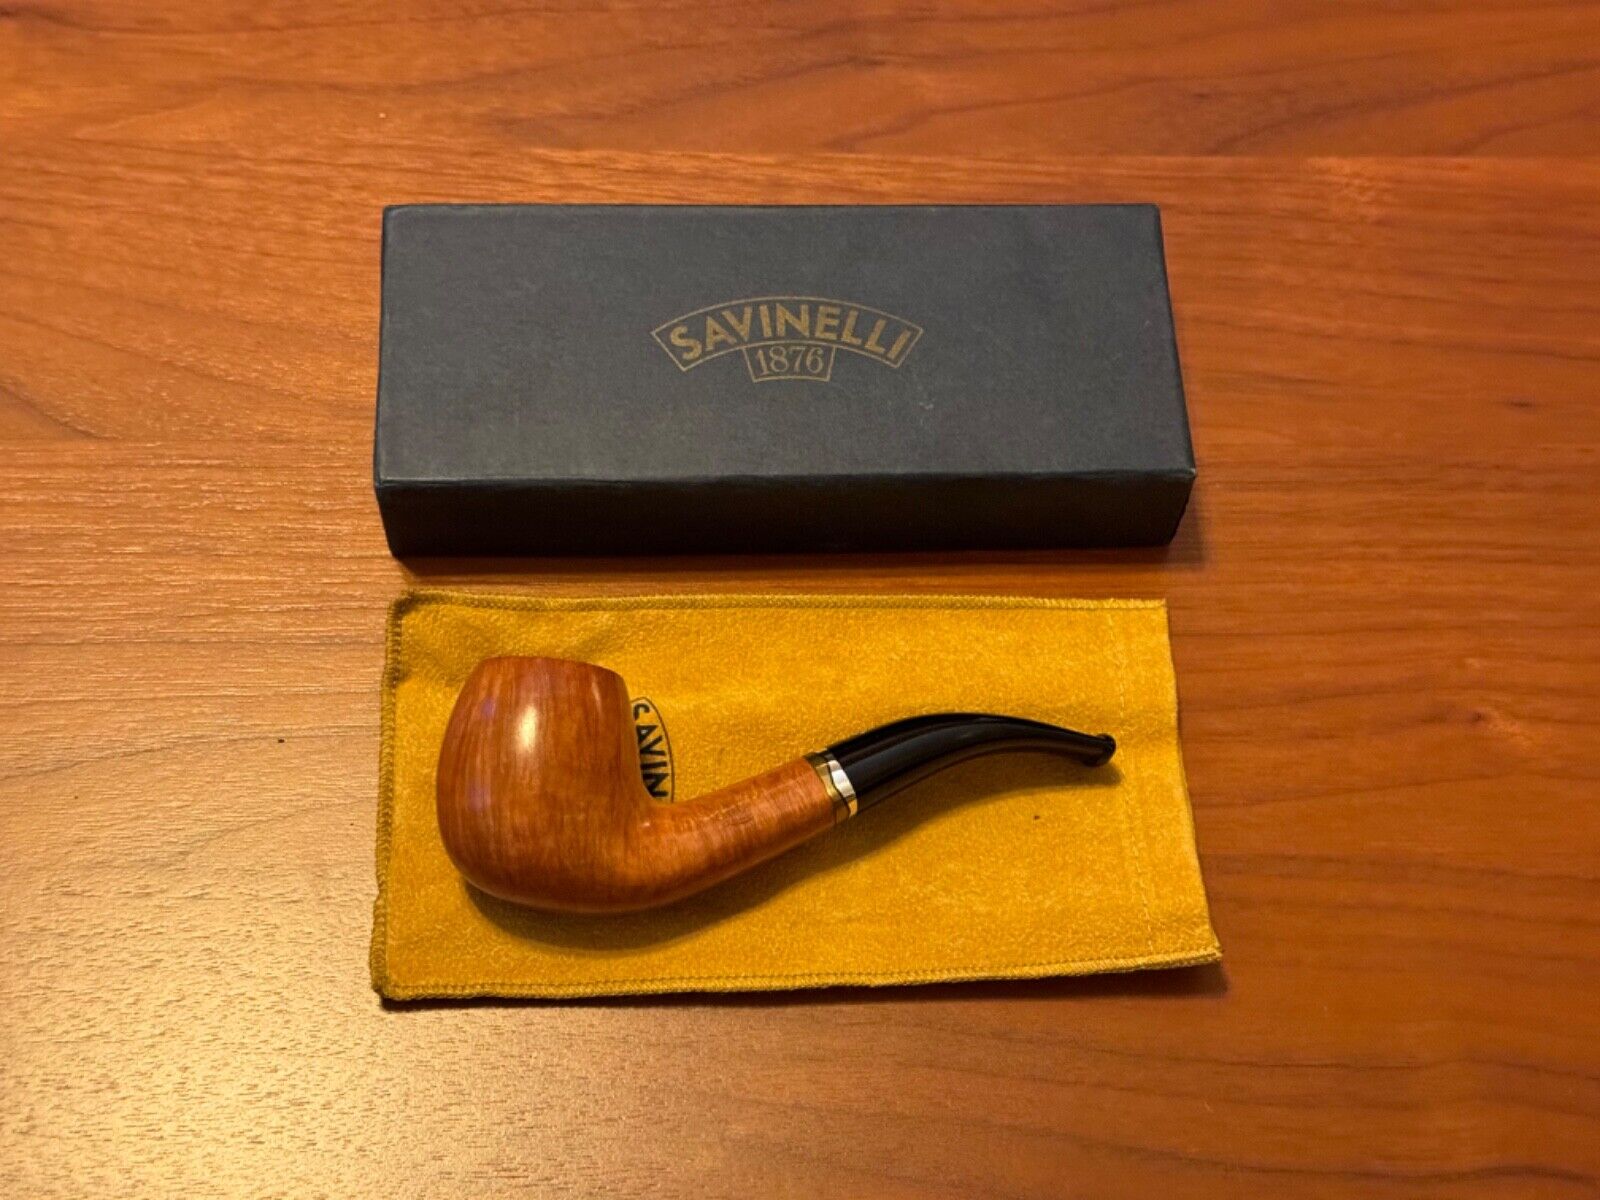 Savinelli Onda Smooth Tobacco Pipe (677 KS) - Italian, Limited Edition